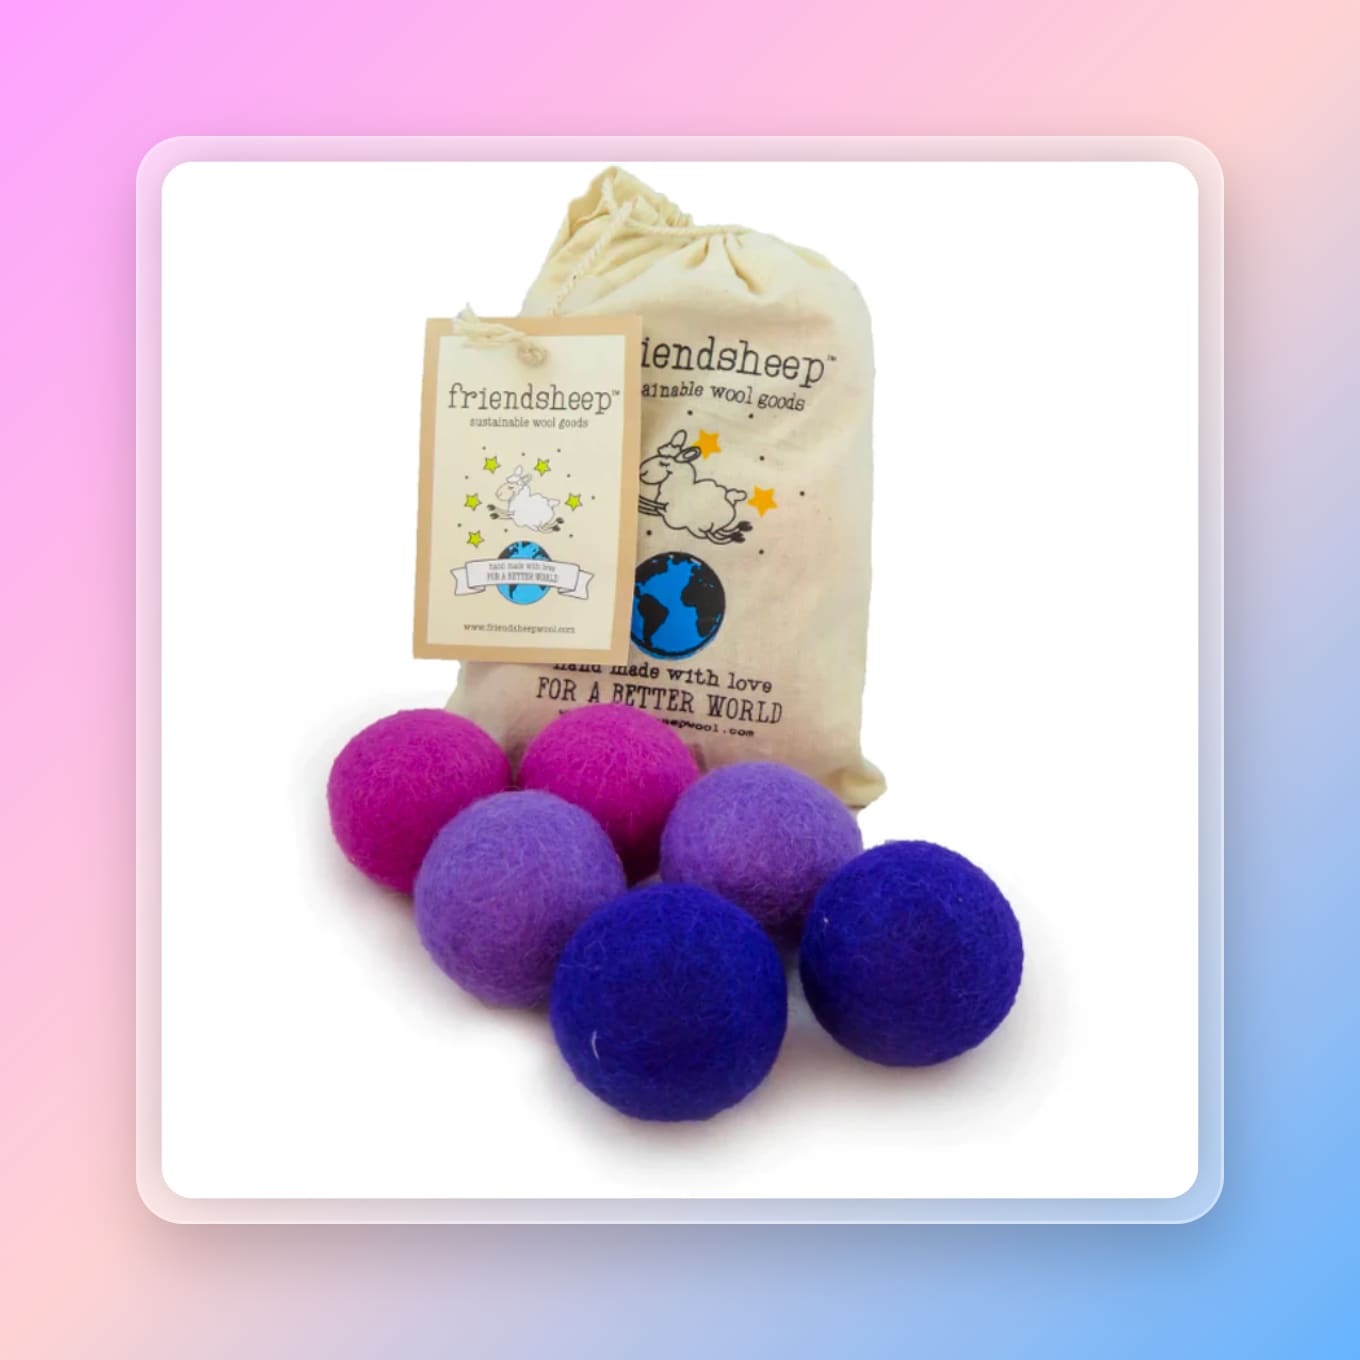 Friendsheet sustainable wool goods: balls of wool in a bag